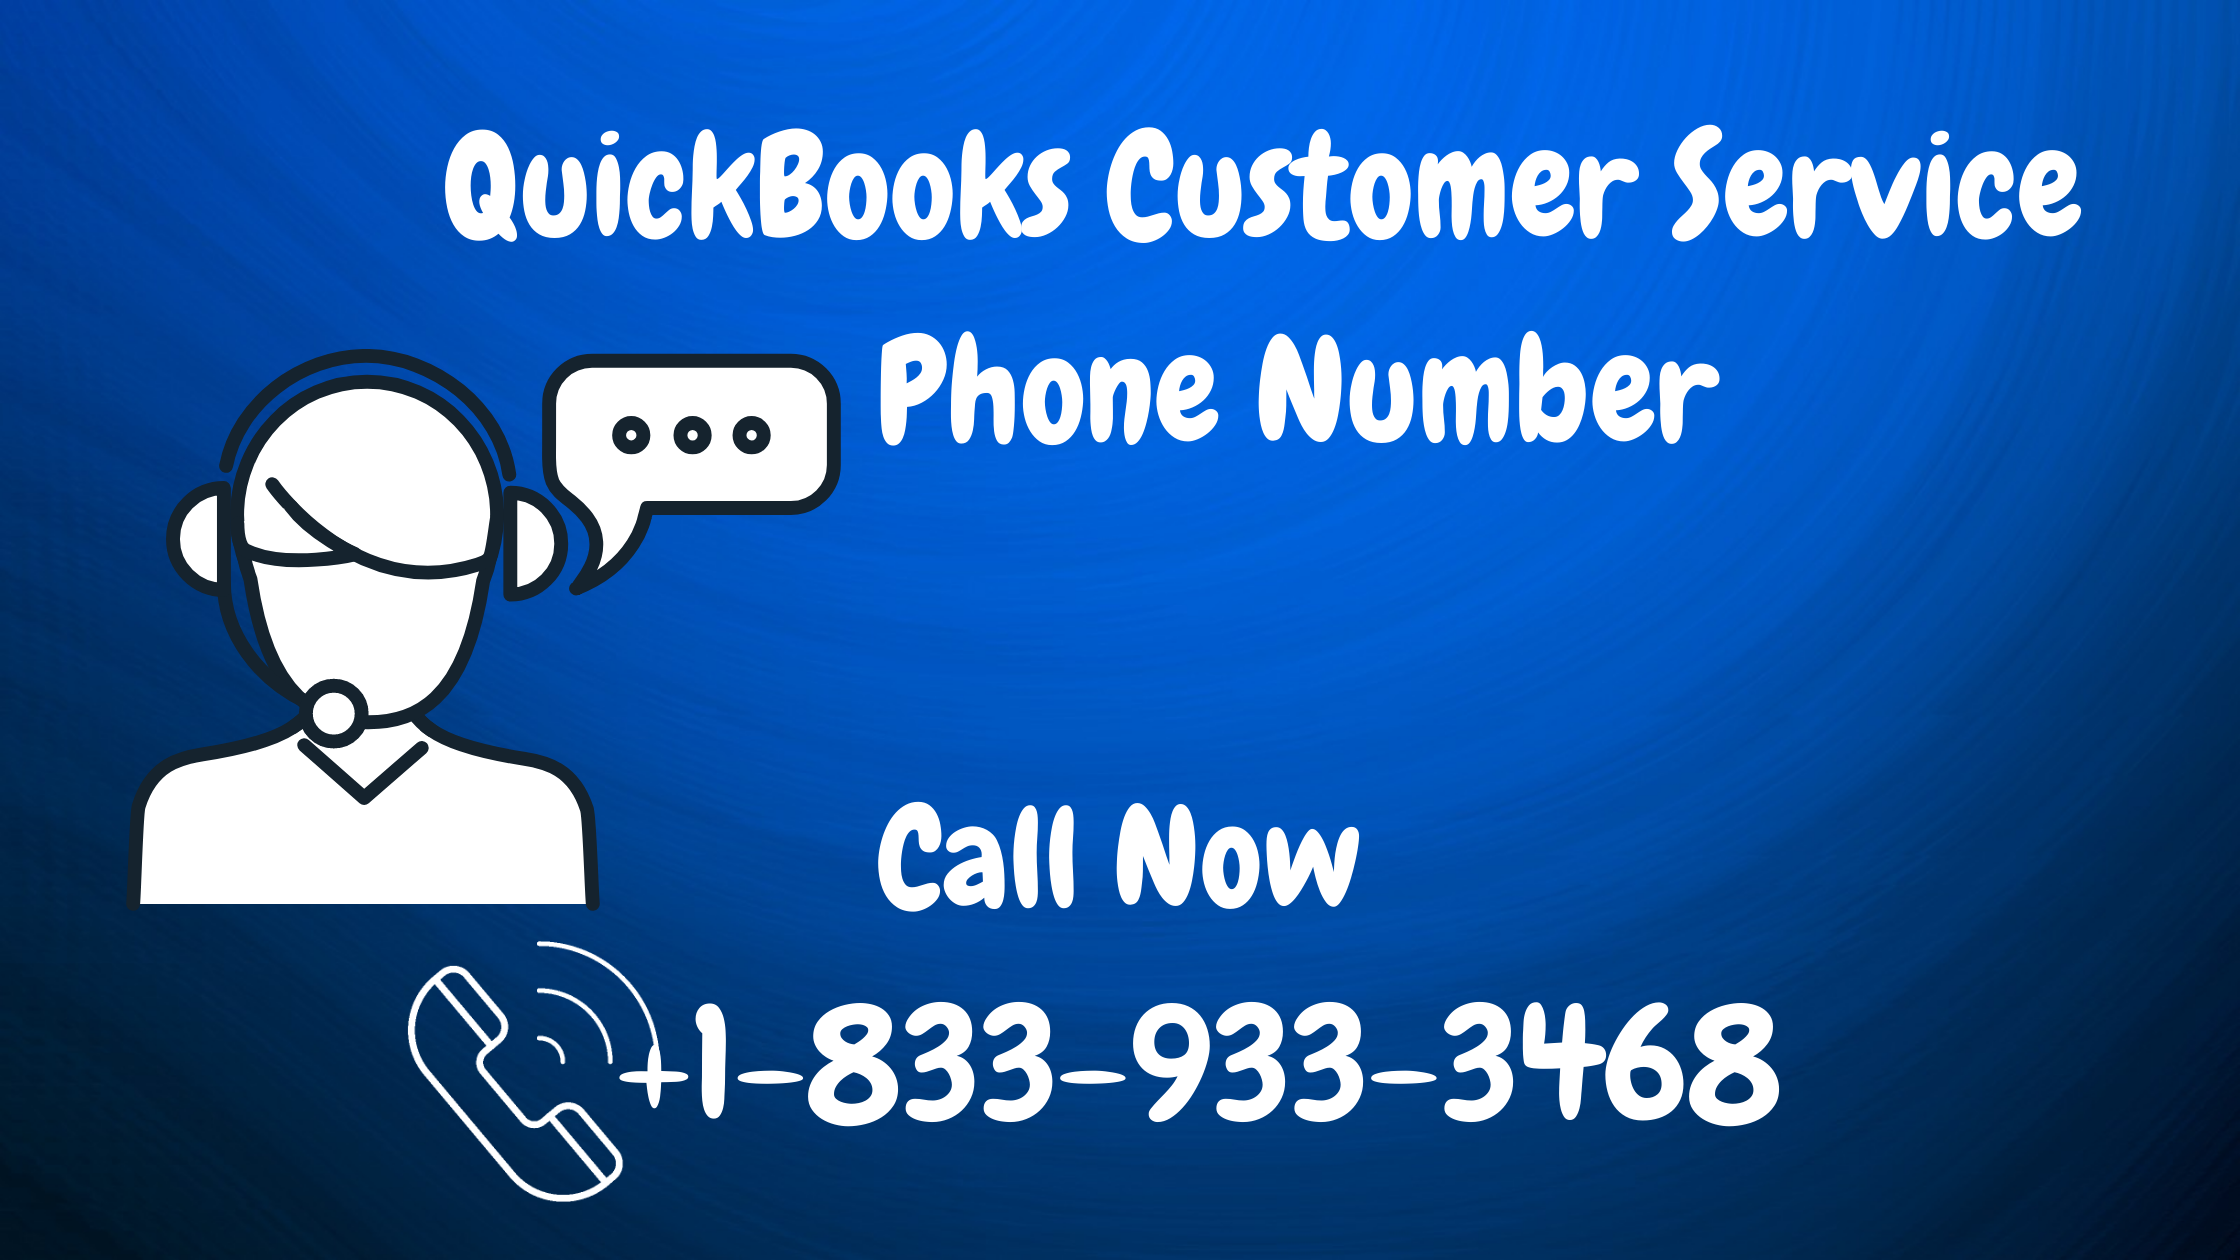 quickbooks-customer-service-phone-number